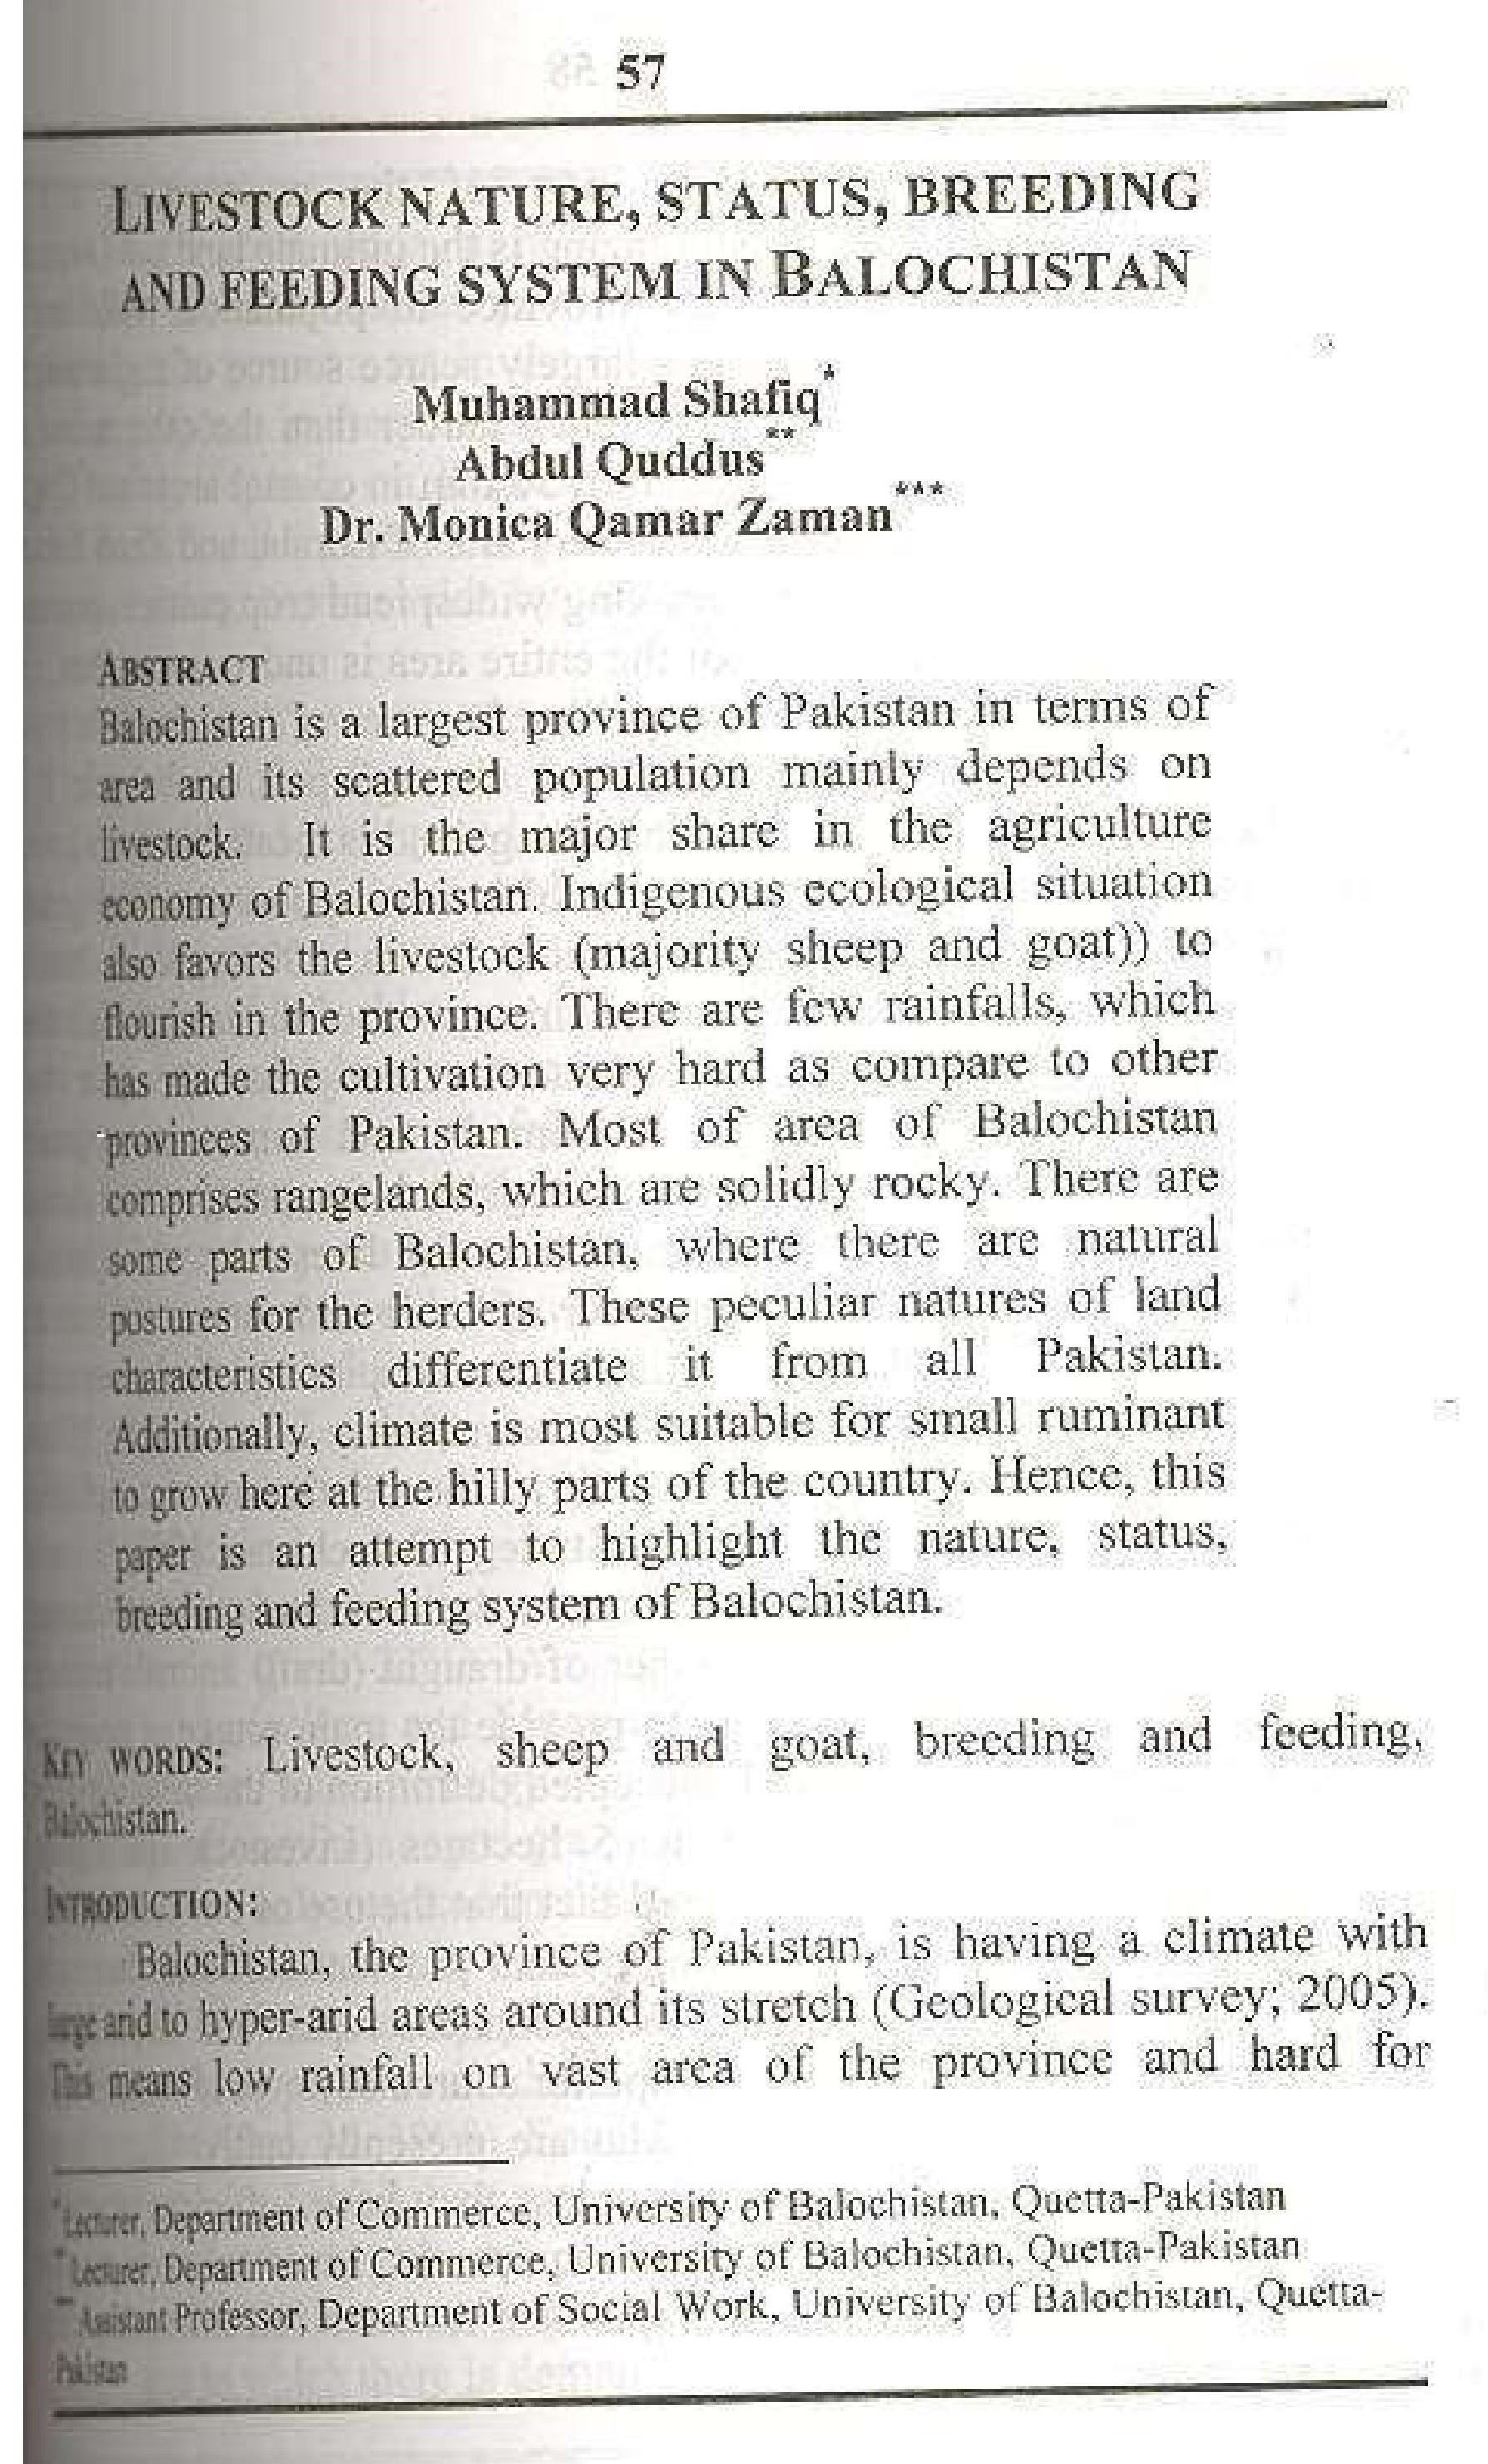 Livestock Nature, Status, Breeding and feeding system in Balochistan.